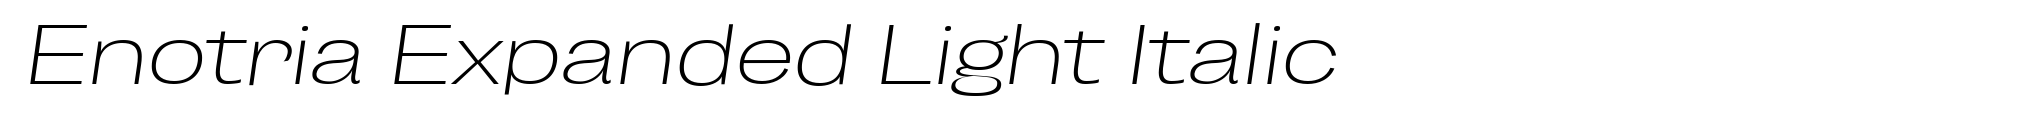 Enotria Expanded Light Italic image